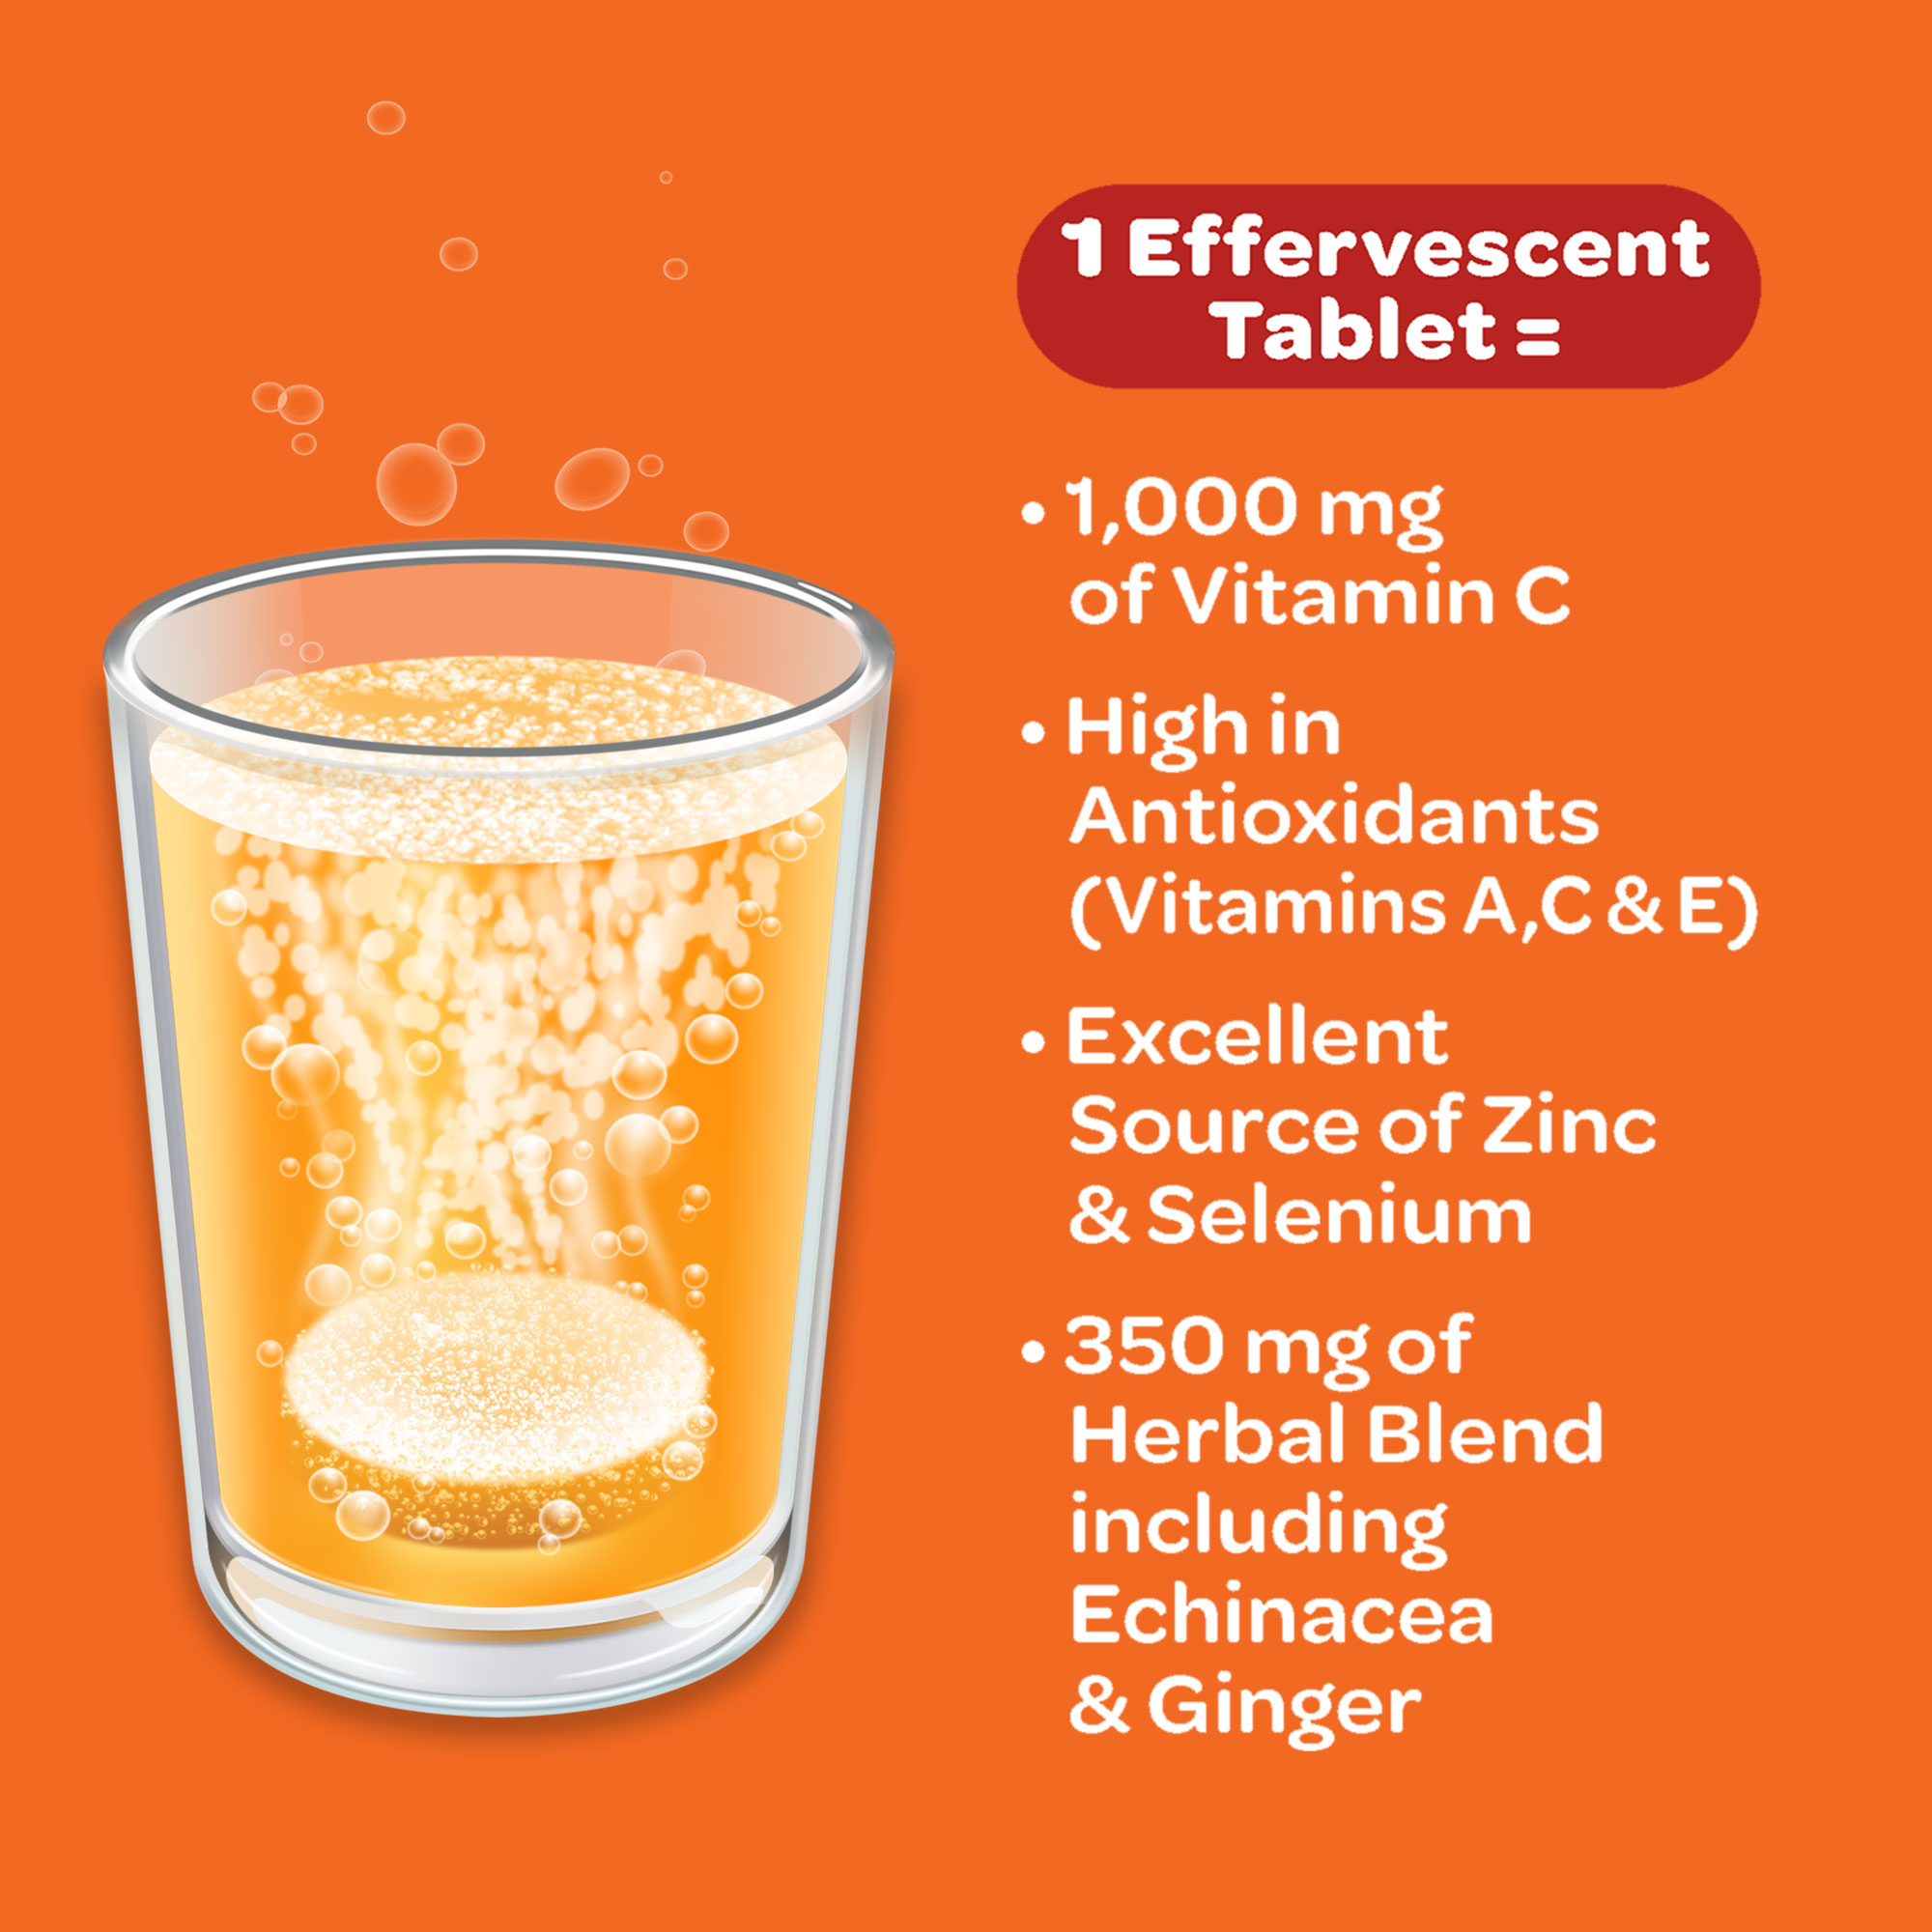 Airborne 1000mg Vitamin C Immune Support Effervescent Tablets, Zesty Orange Flavor, 10 Count - image 4 of 6